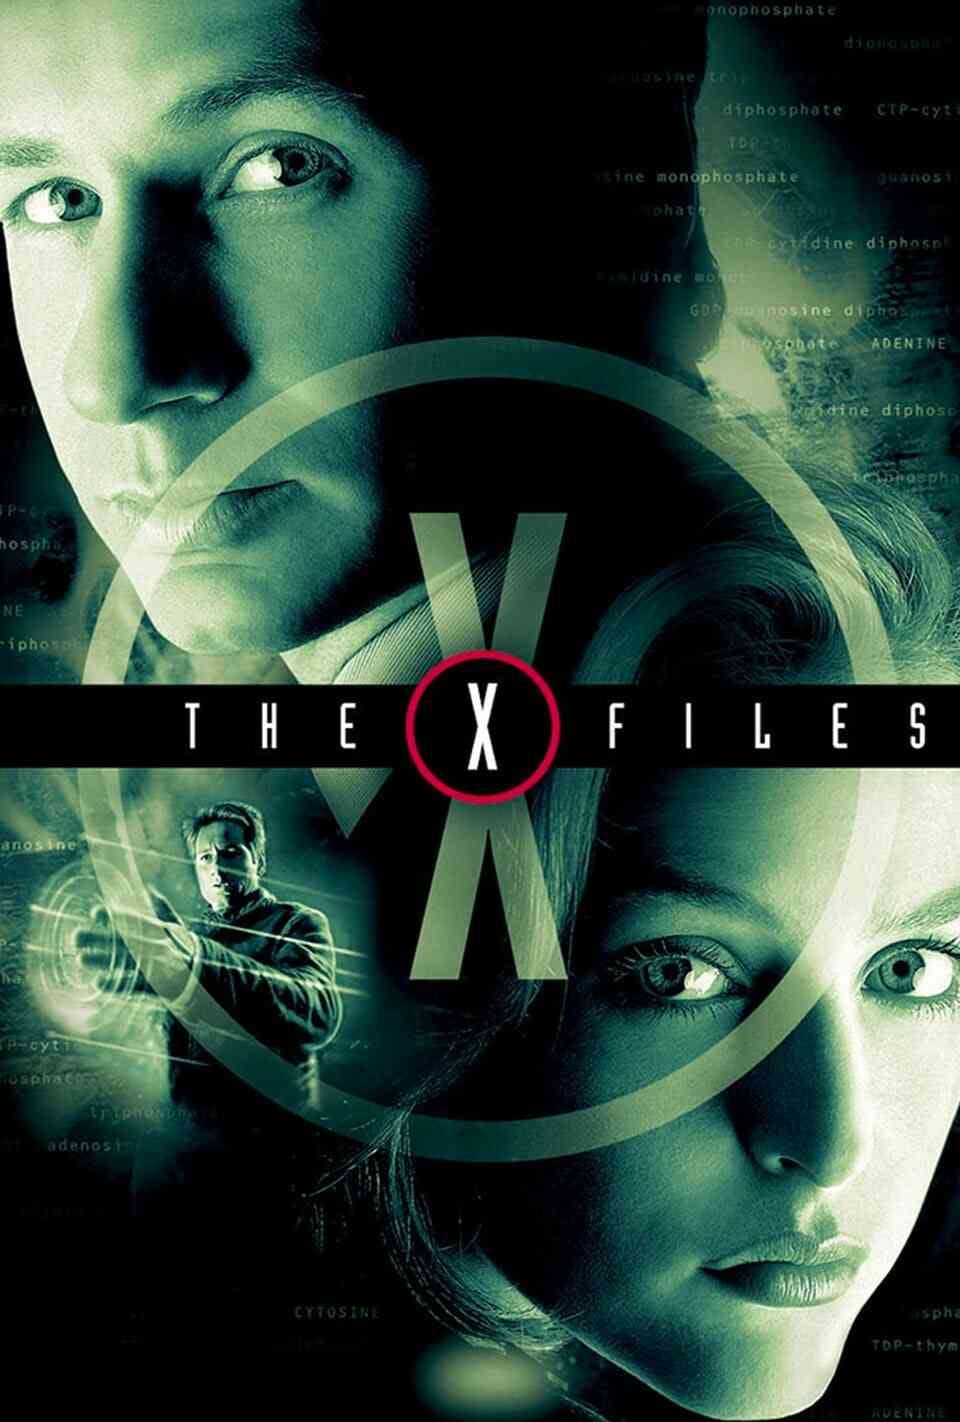 Read The X-Files screenplay.